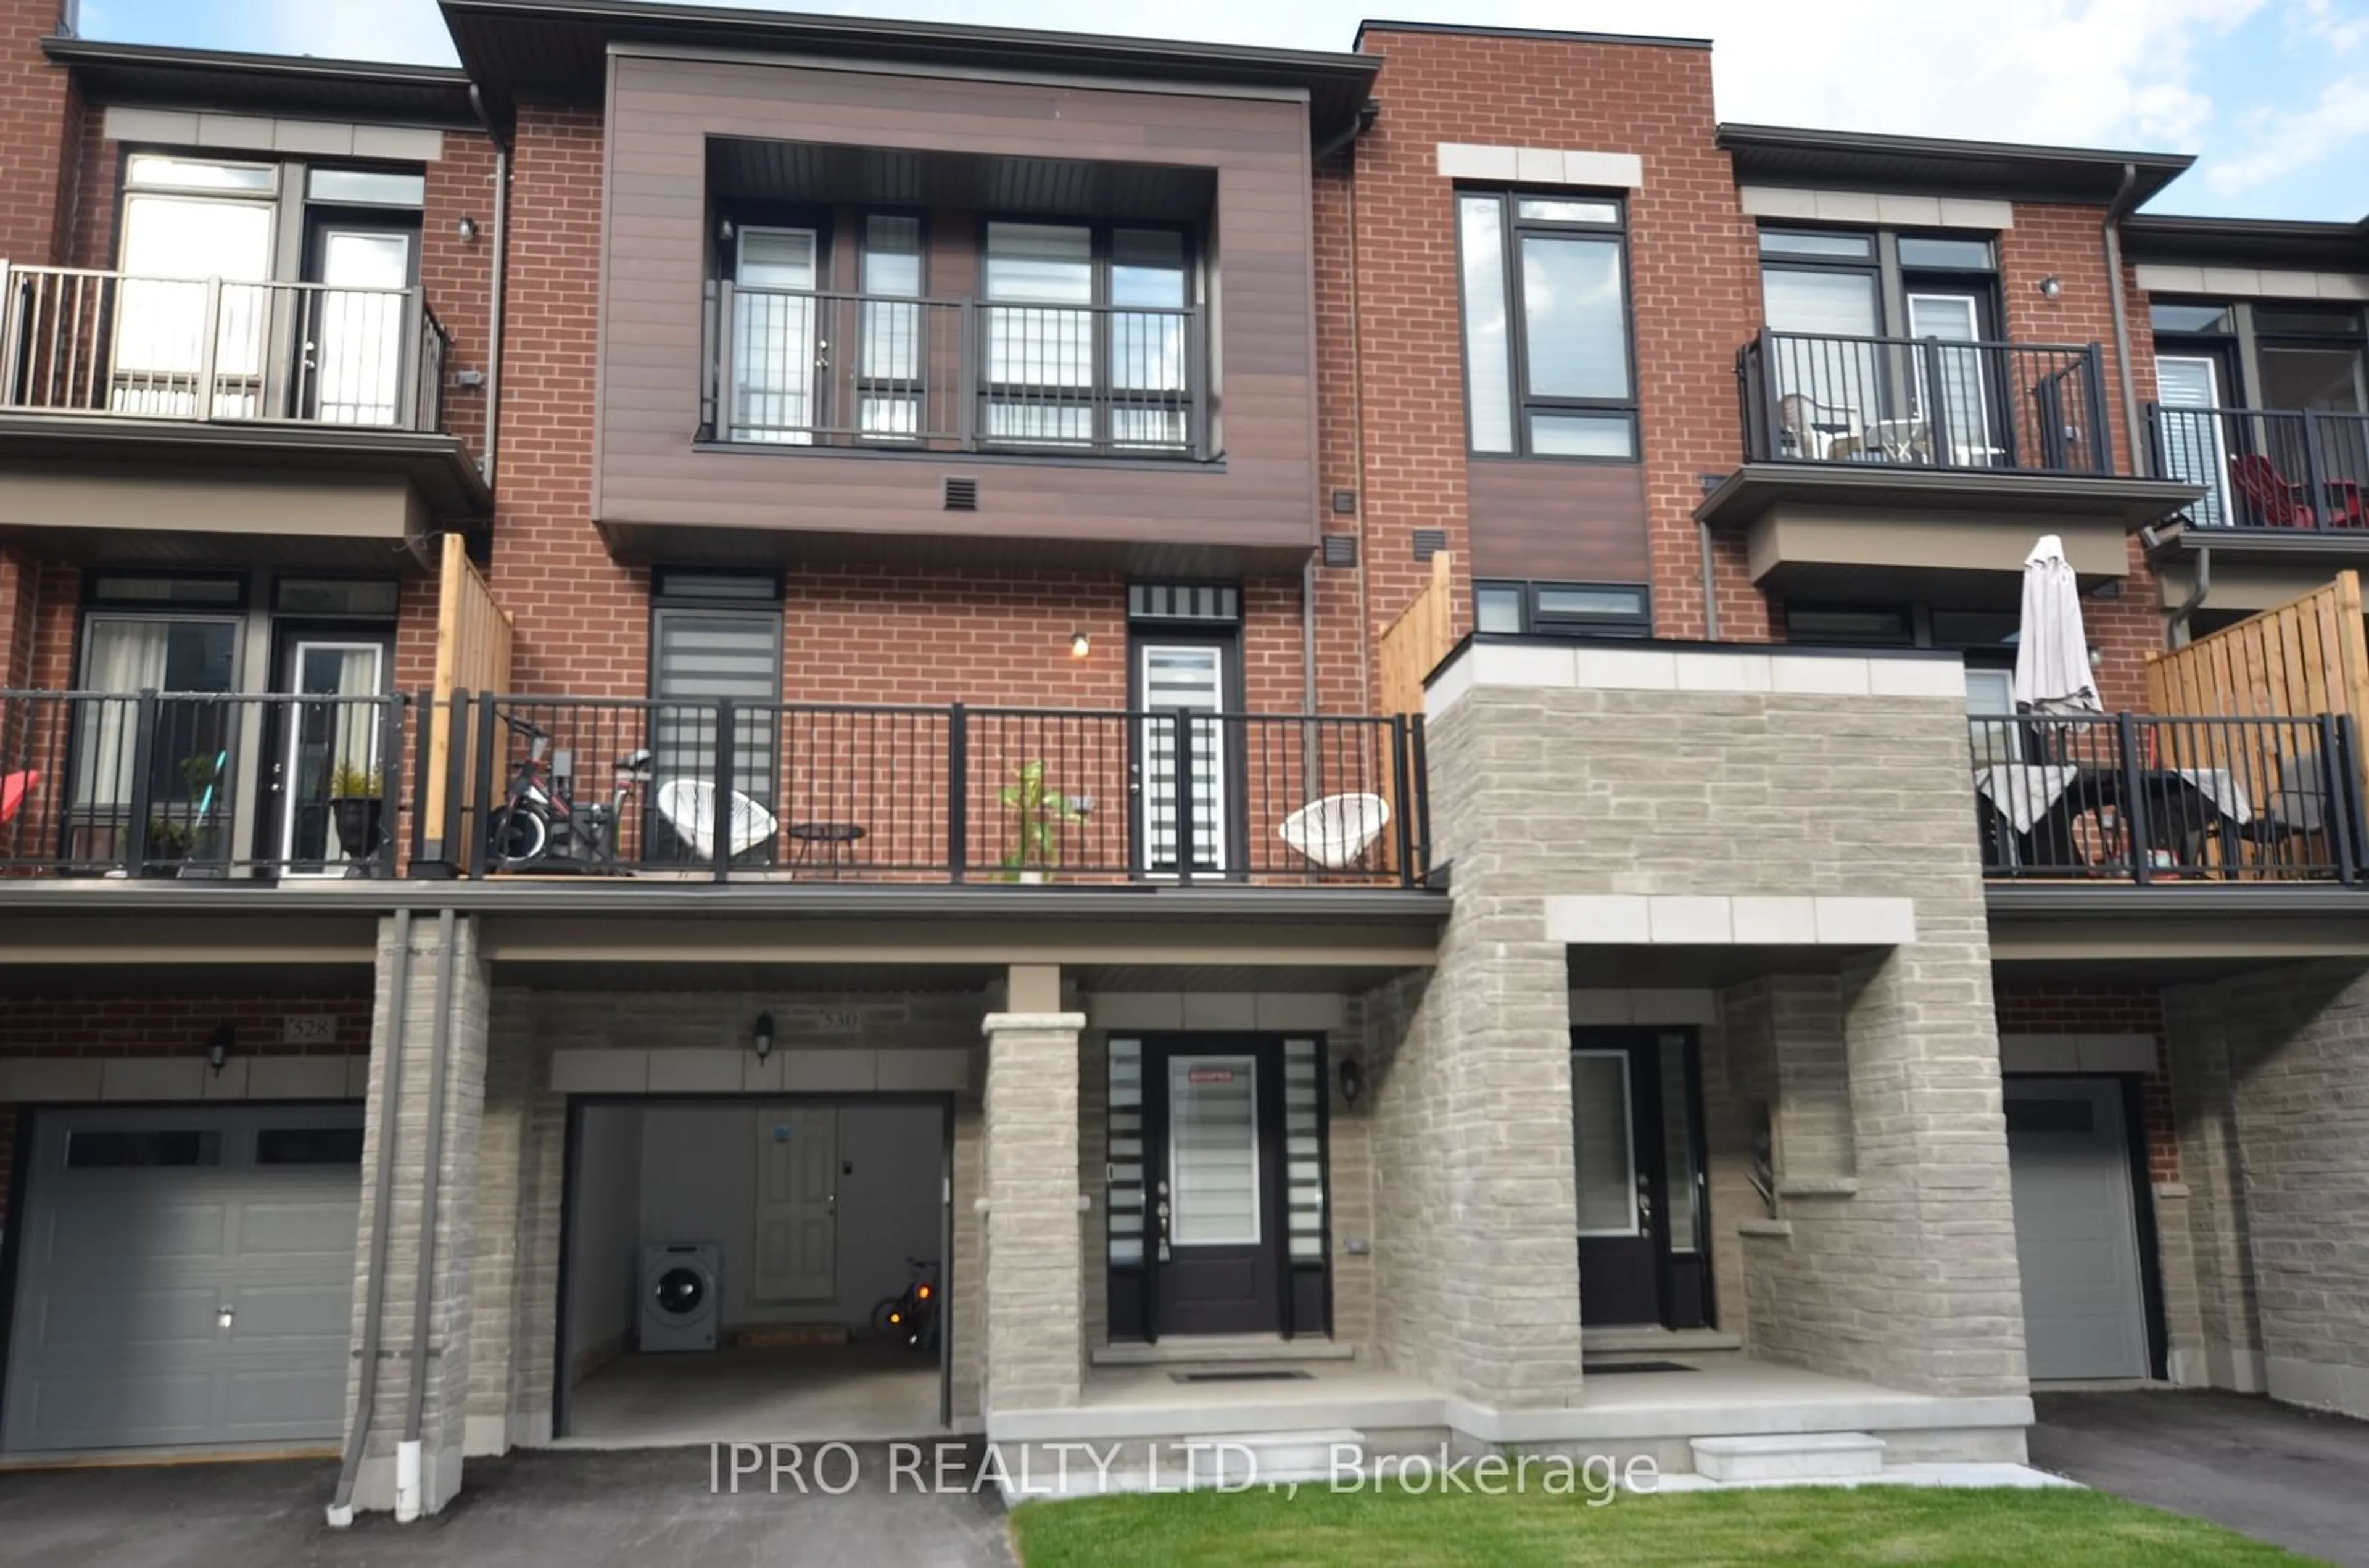 Home with brick exterior material for 530 DANKS RIDGE Dr, Ajax Ontario L1S 0H4